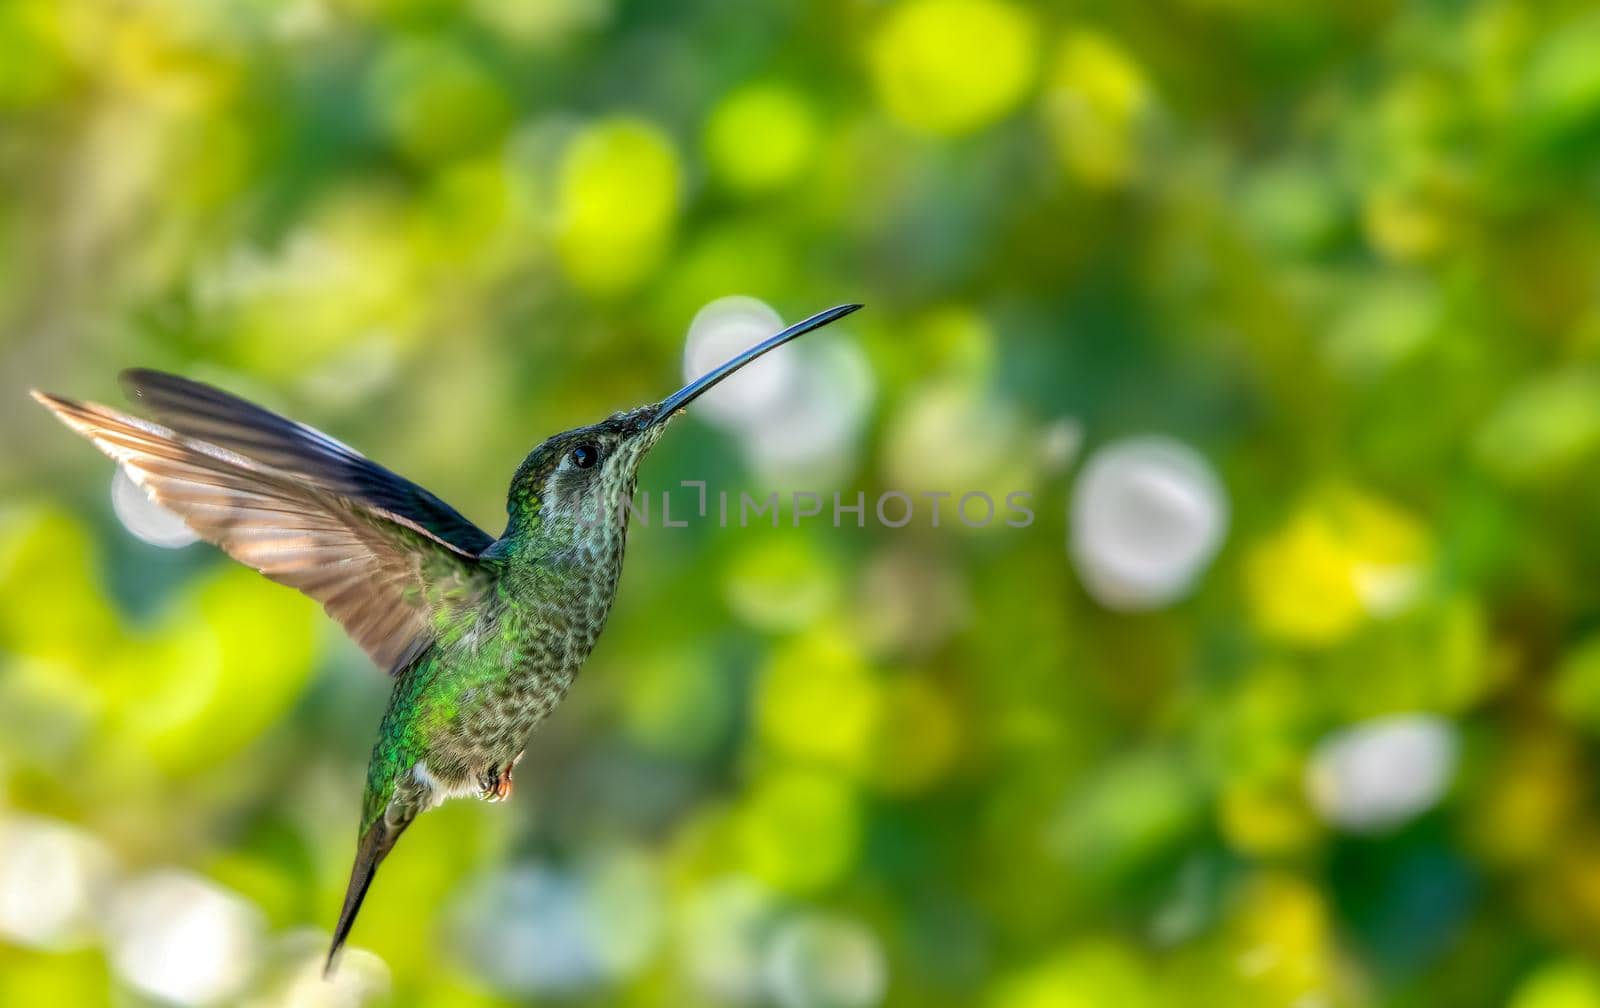 Talamanca hummingbird (Eugenes spectabilis) or admirable hummingbird by artush